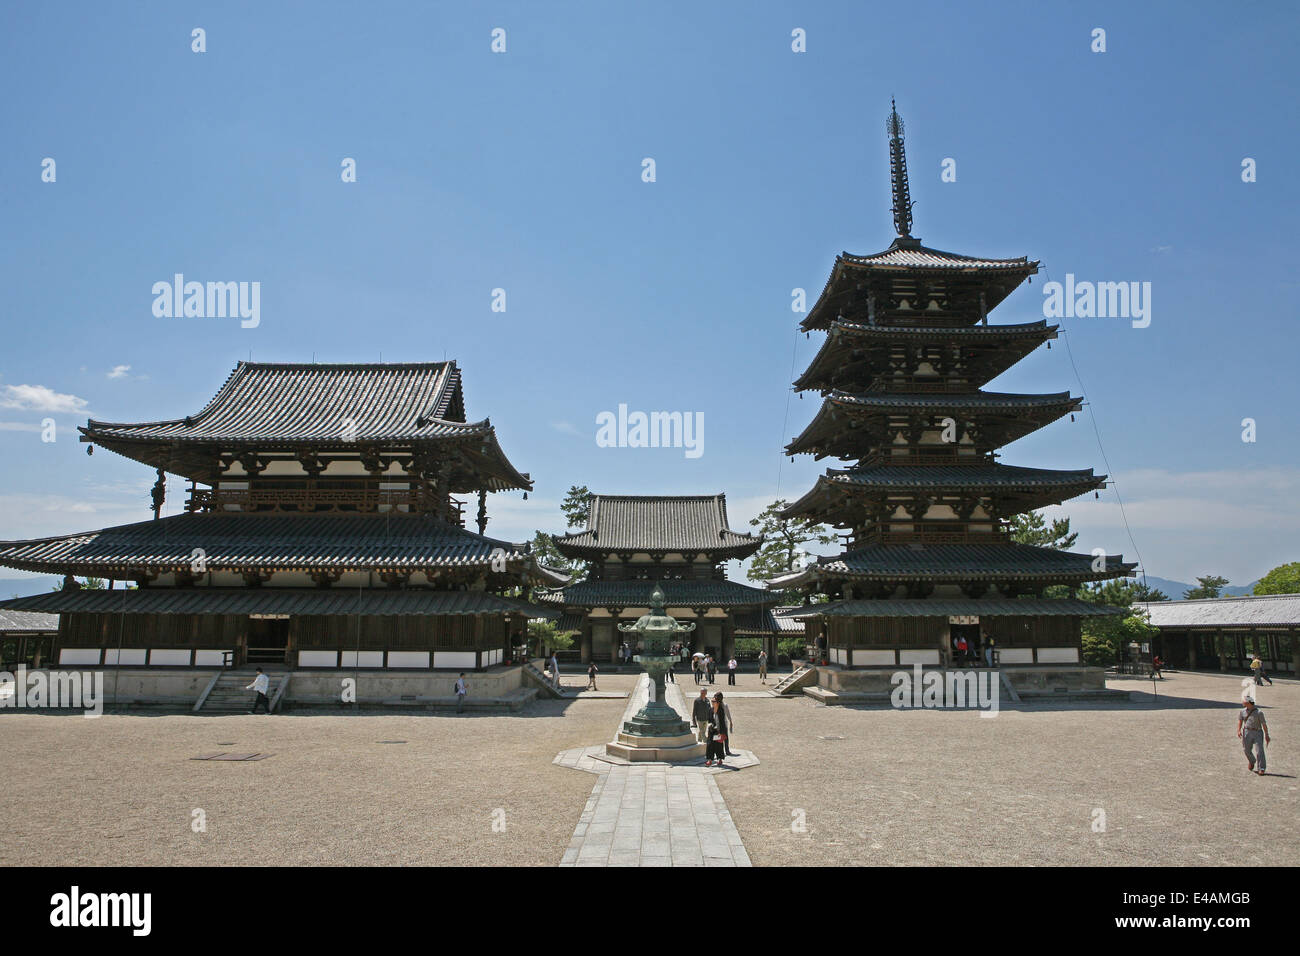 Horyuji temple complex Stock Photo